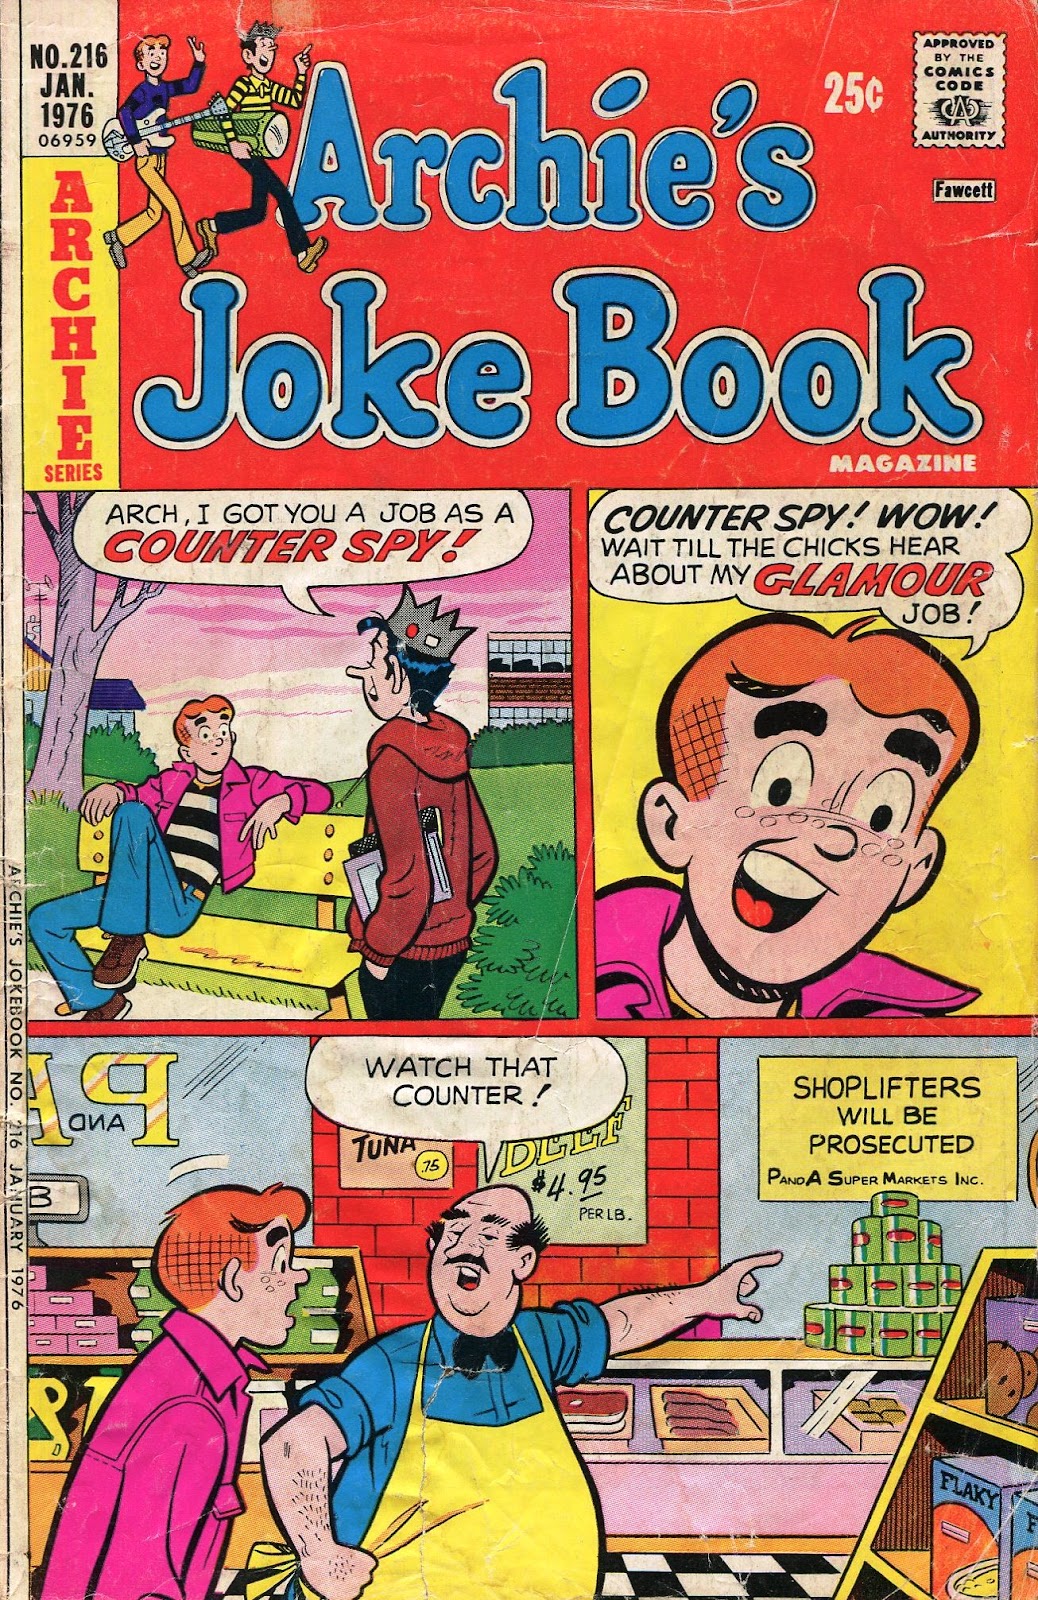 Archie's Joke Book Magazine issue 216 - Page 1